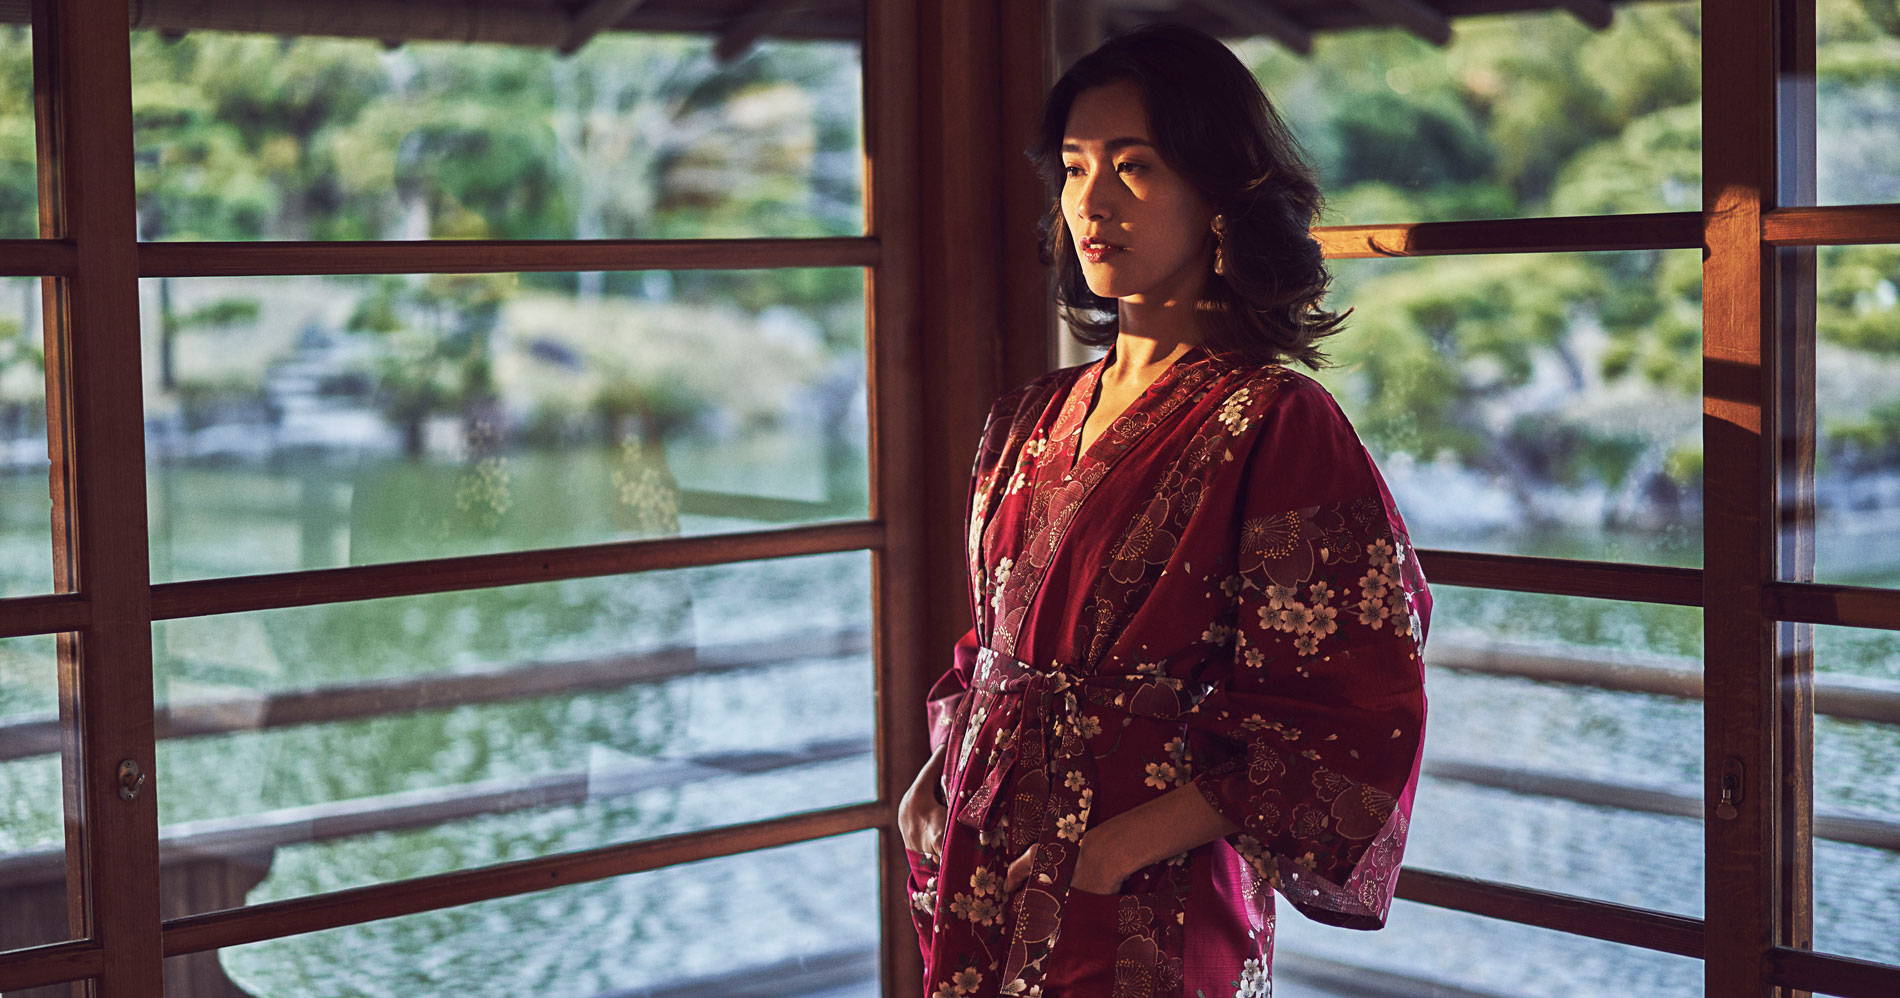 Japanese Cloth Drawstring Bag Vtg Fabric Kimono Pouch Floral Red